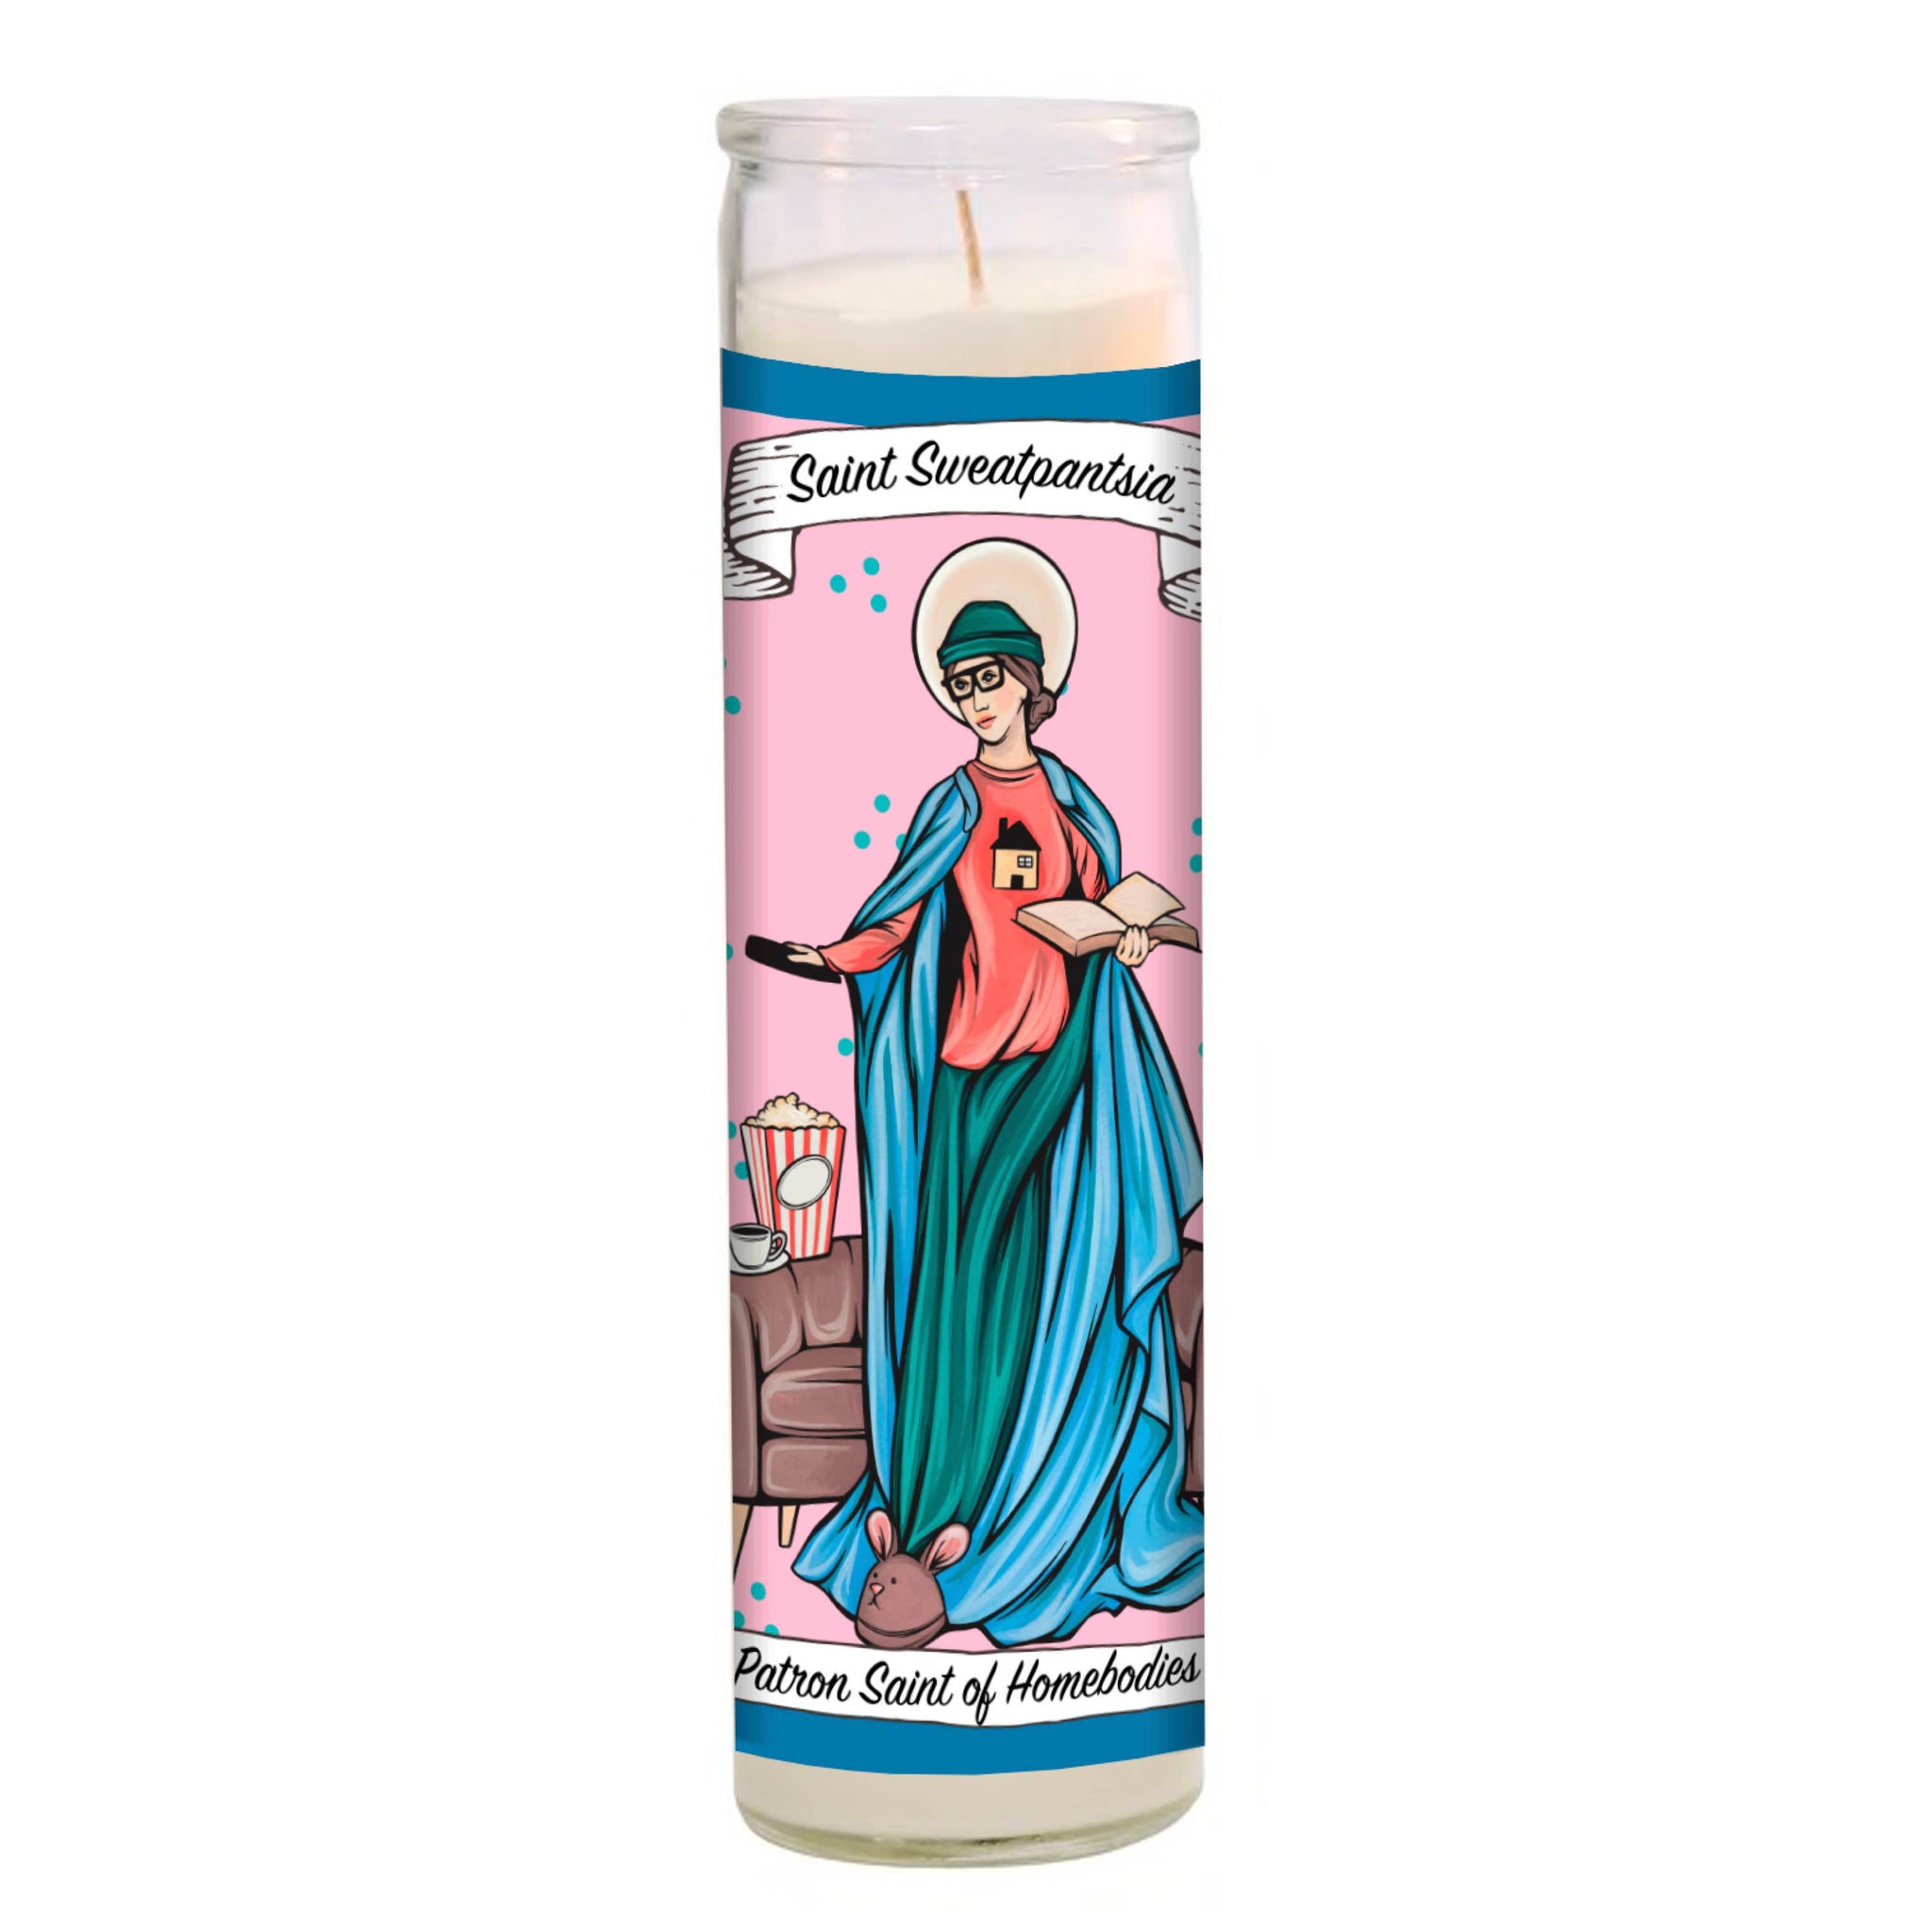 Saint Sweatpantsia Candle